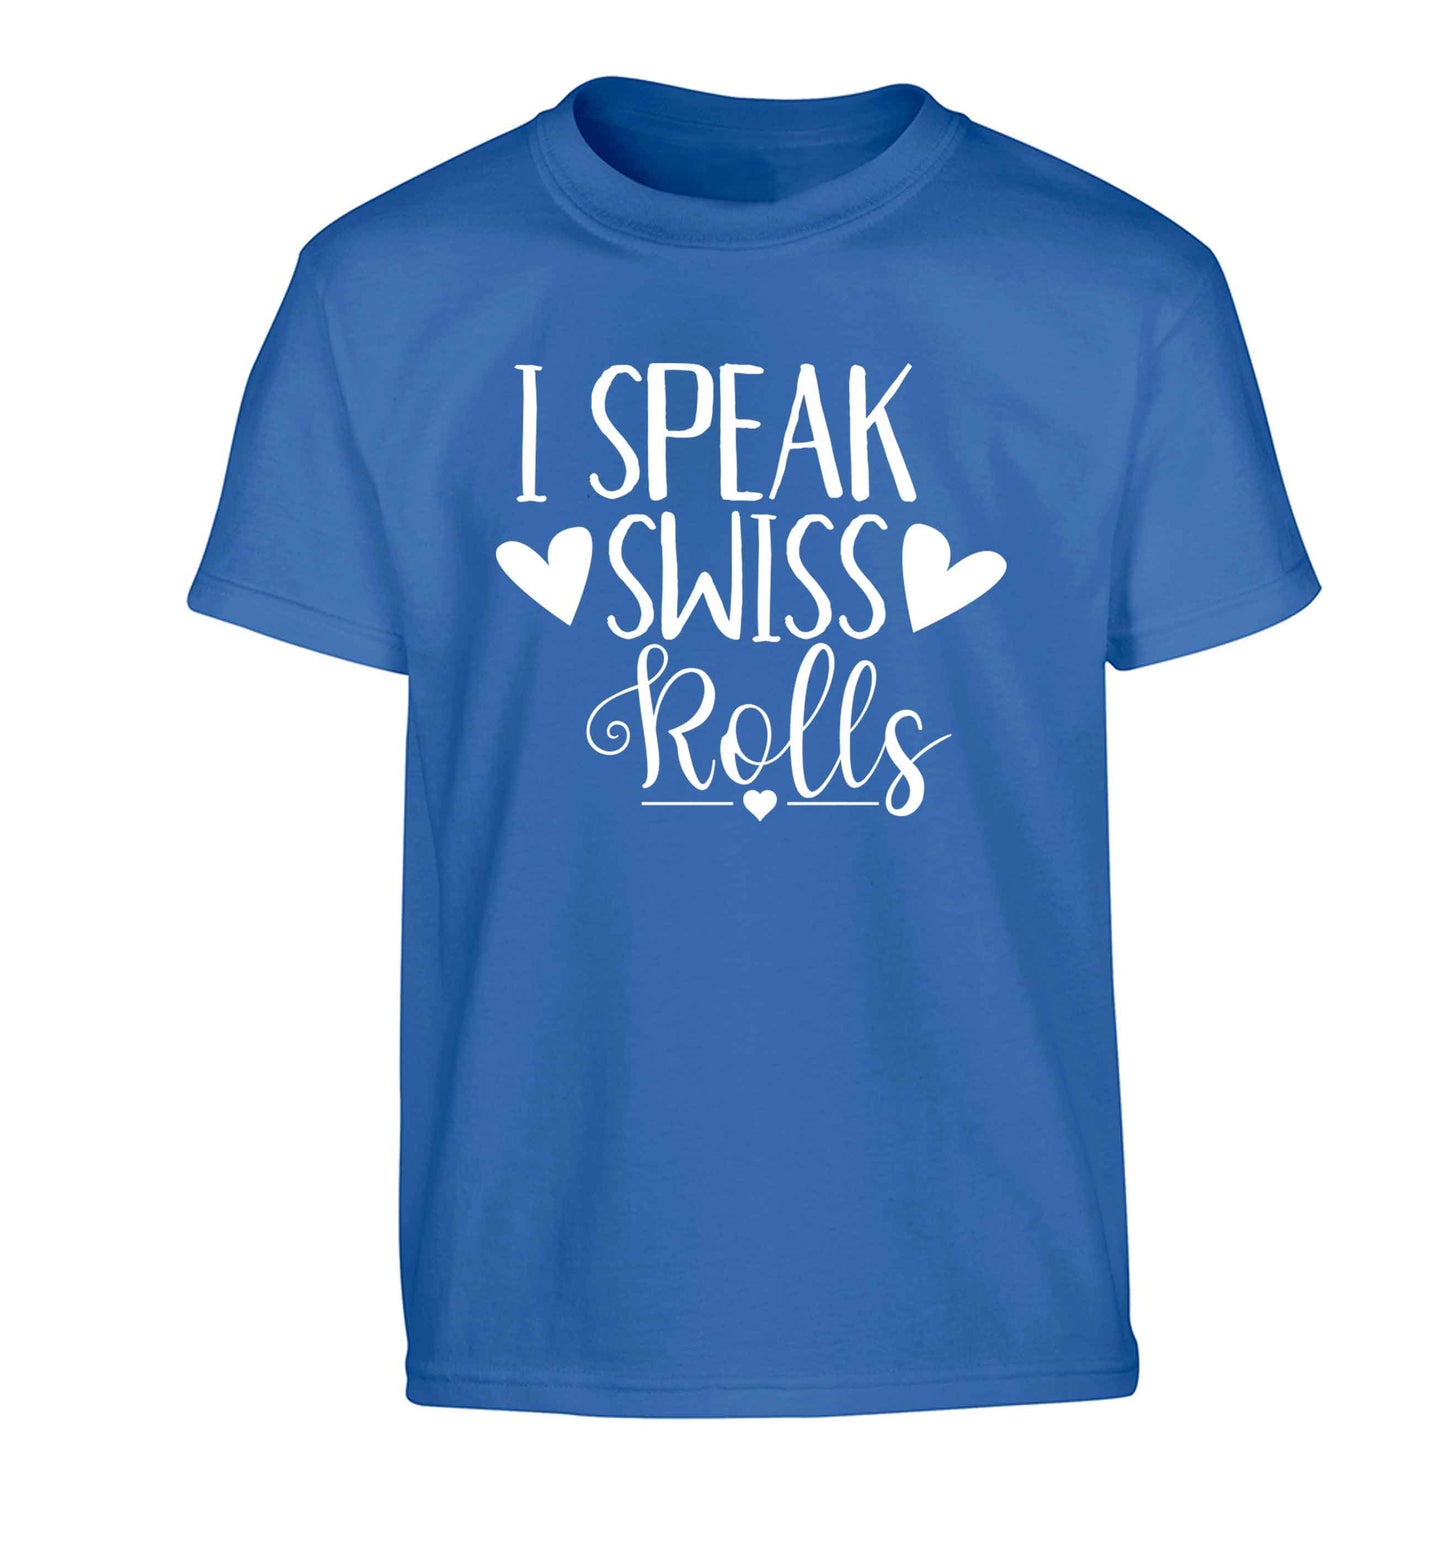 I speak swiss..rolls Children's blue Tshirt 12-13 Years